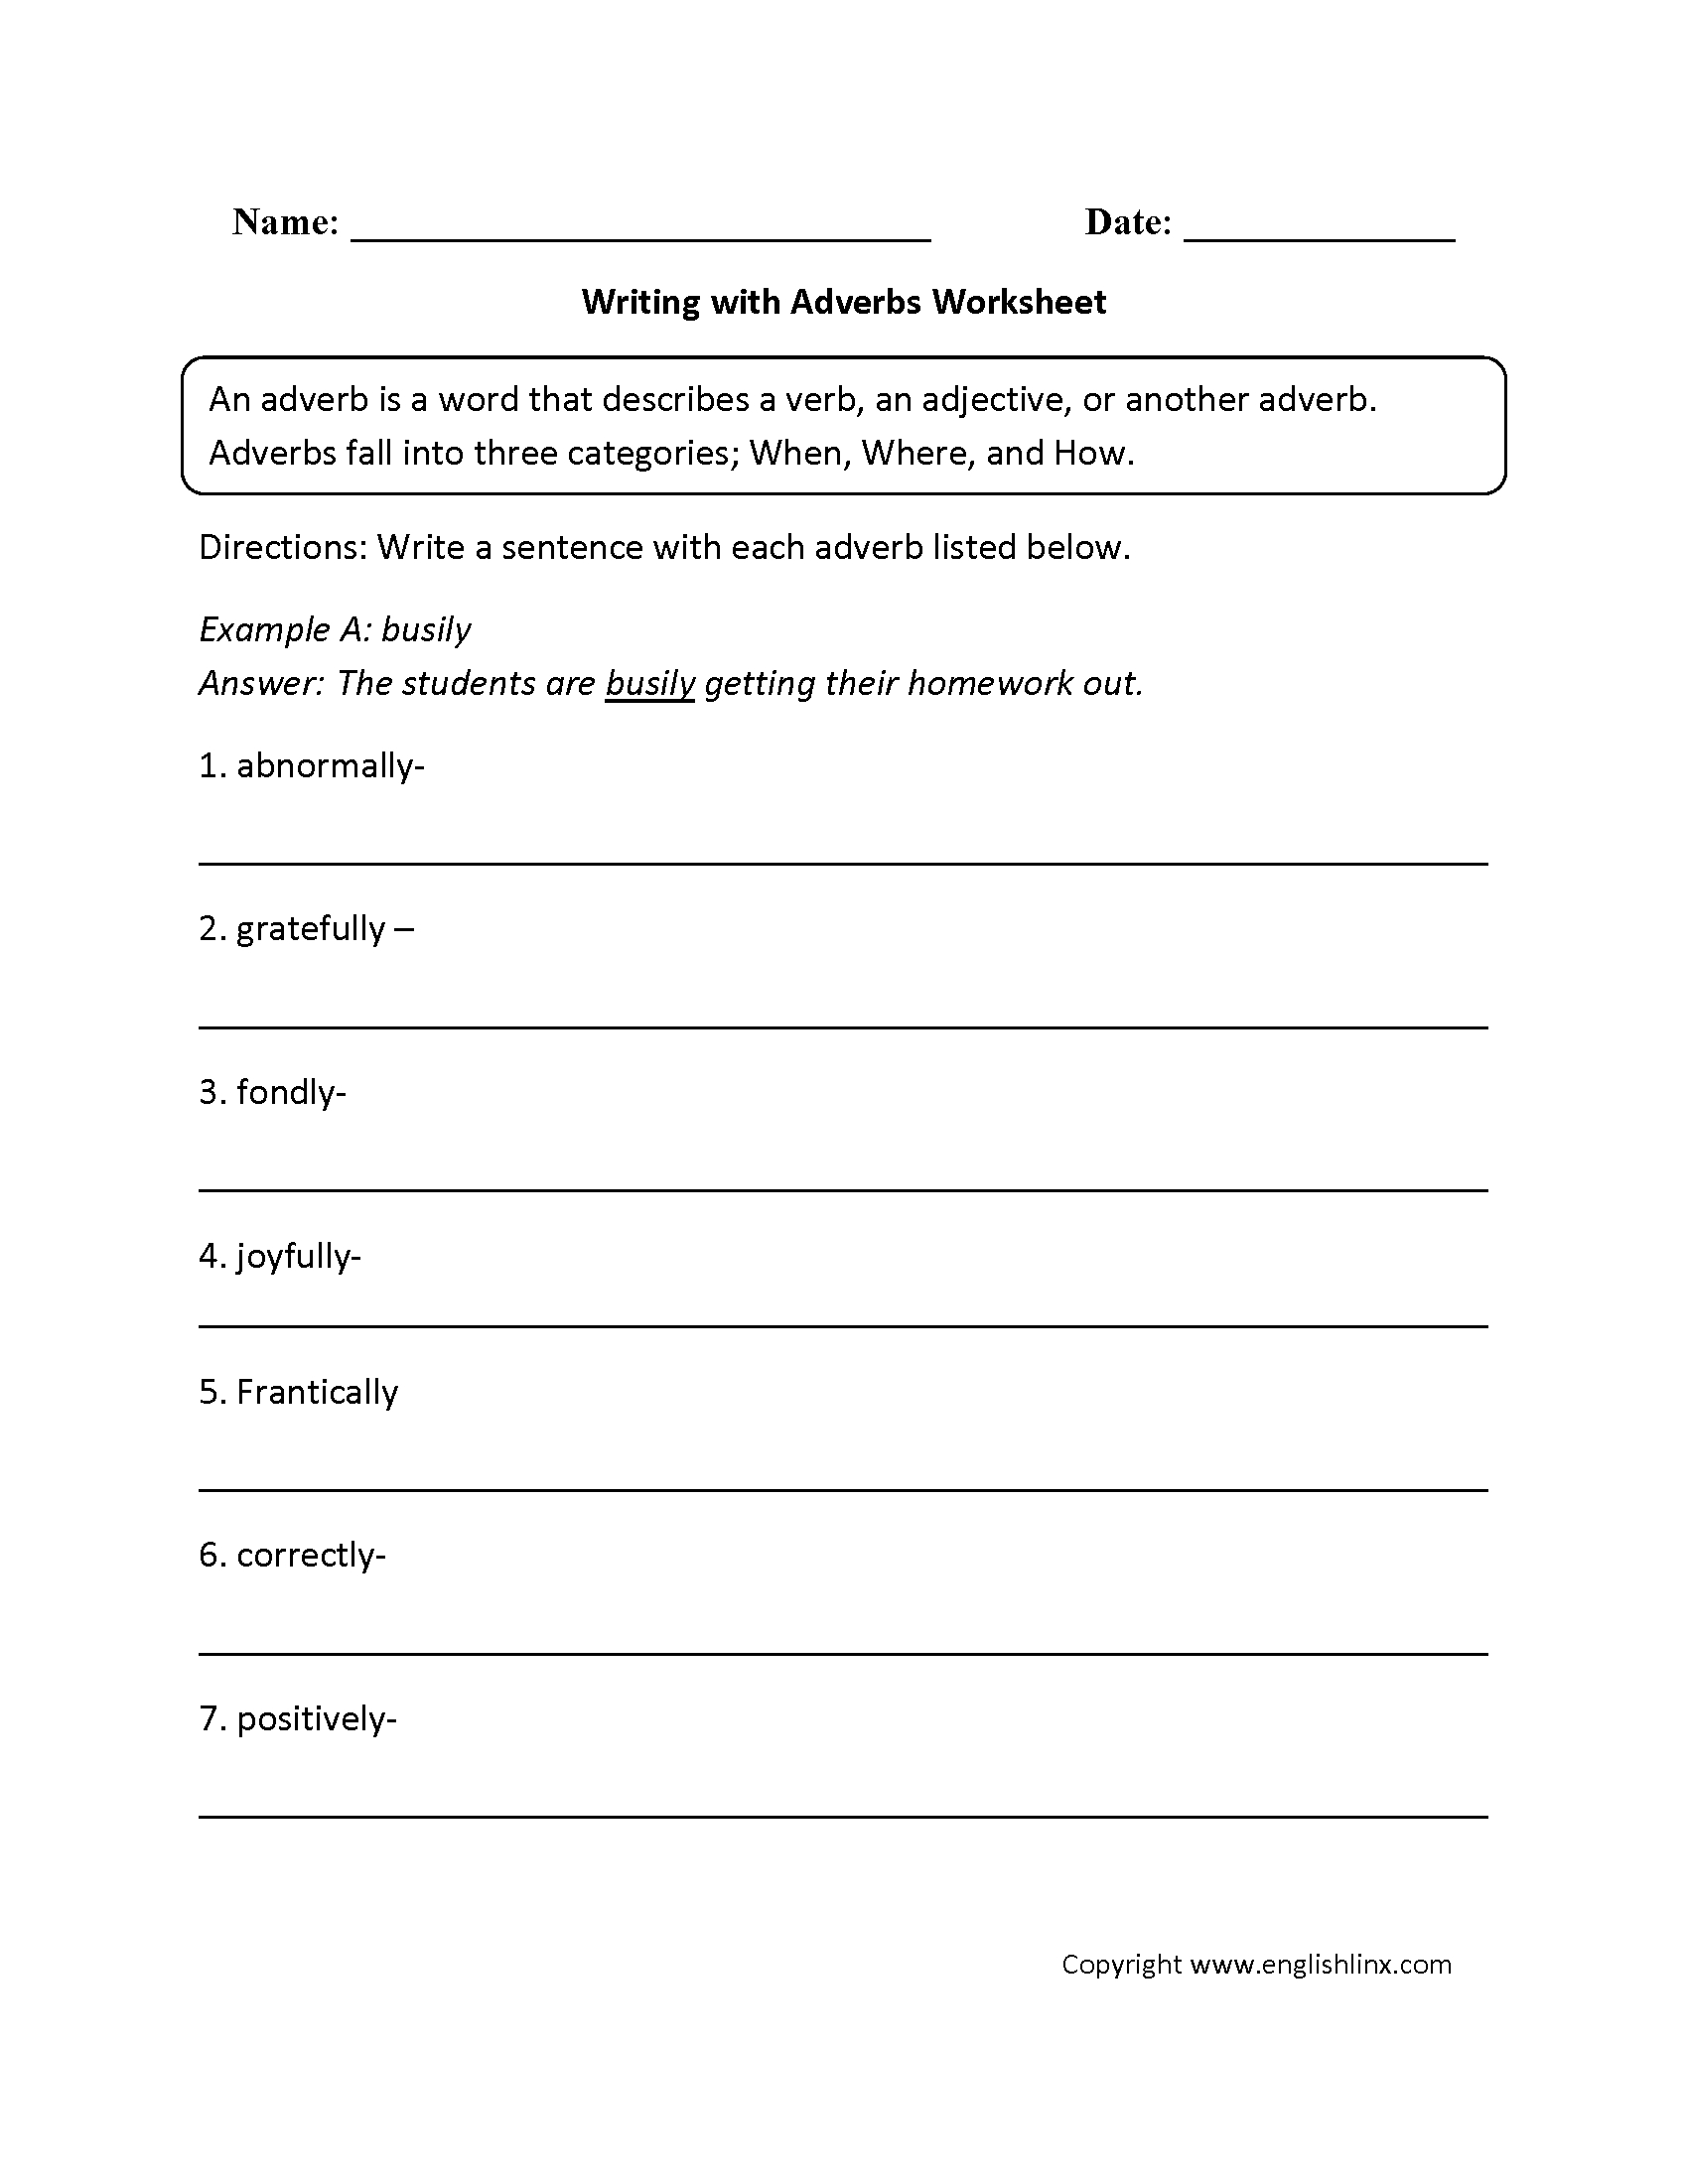 Adverb Worksheets Pdf Db excel